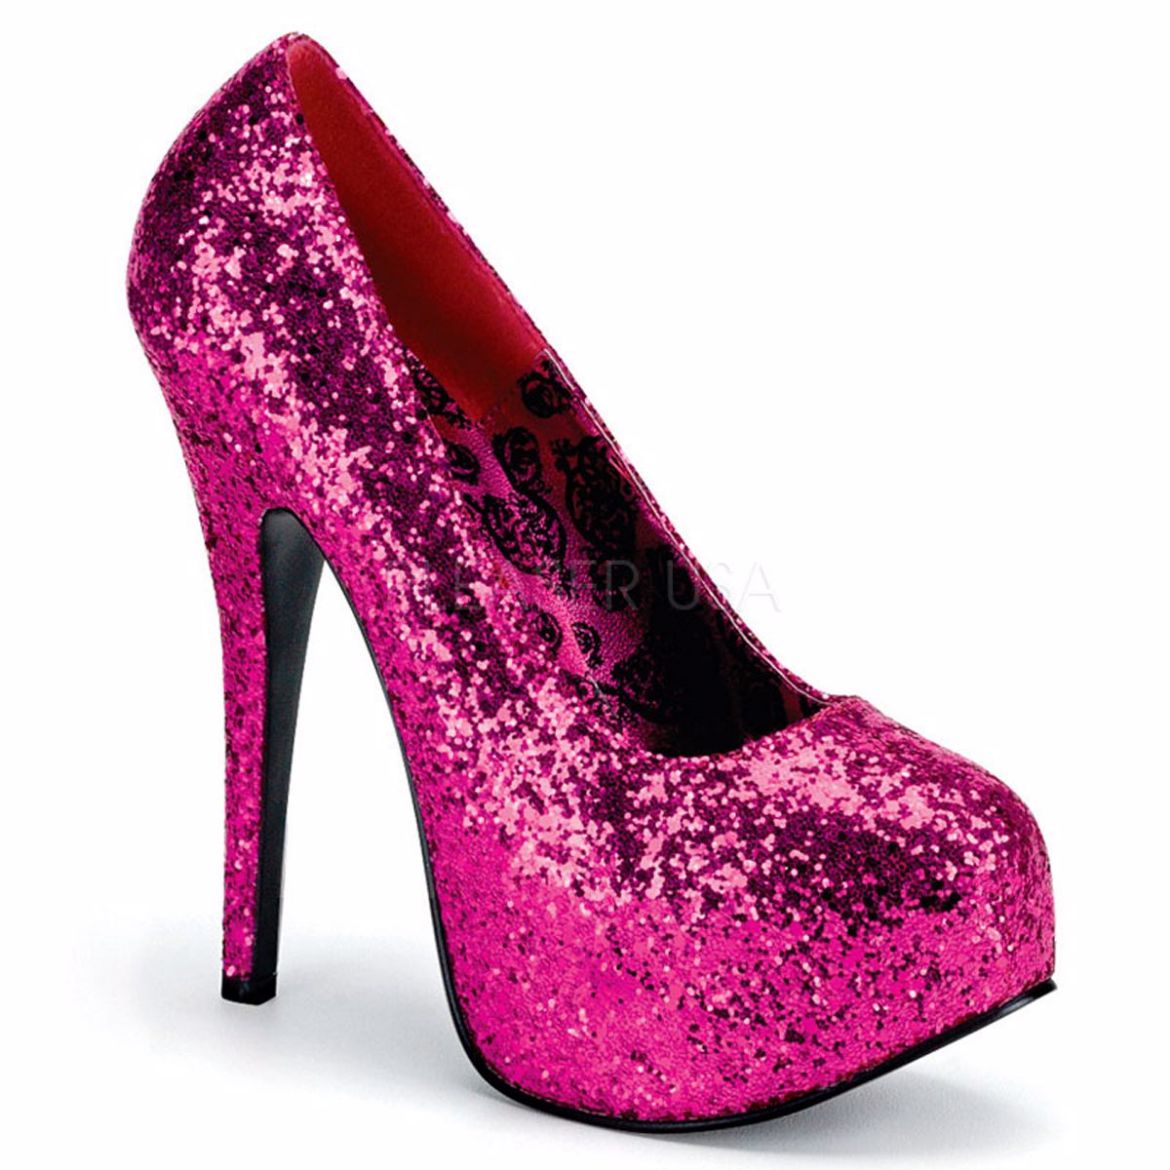 Product image of Bordello Teeze-06G Hot Pink Glitter, 5 3/4 inch (14.6 cm) Heel, 1 3/4 inch (4.4 cm) Platform Court Pump Shoes